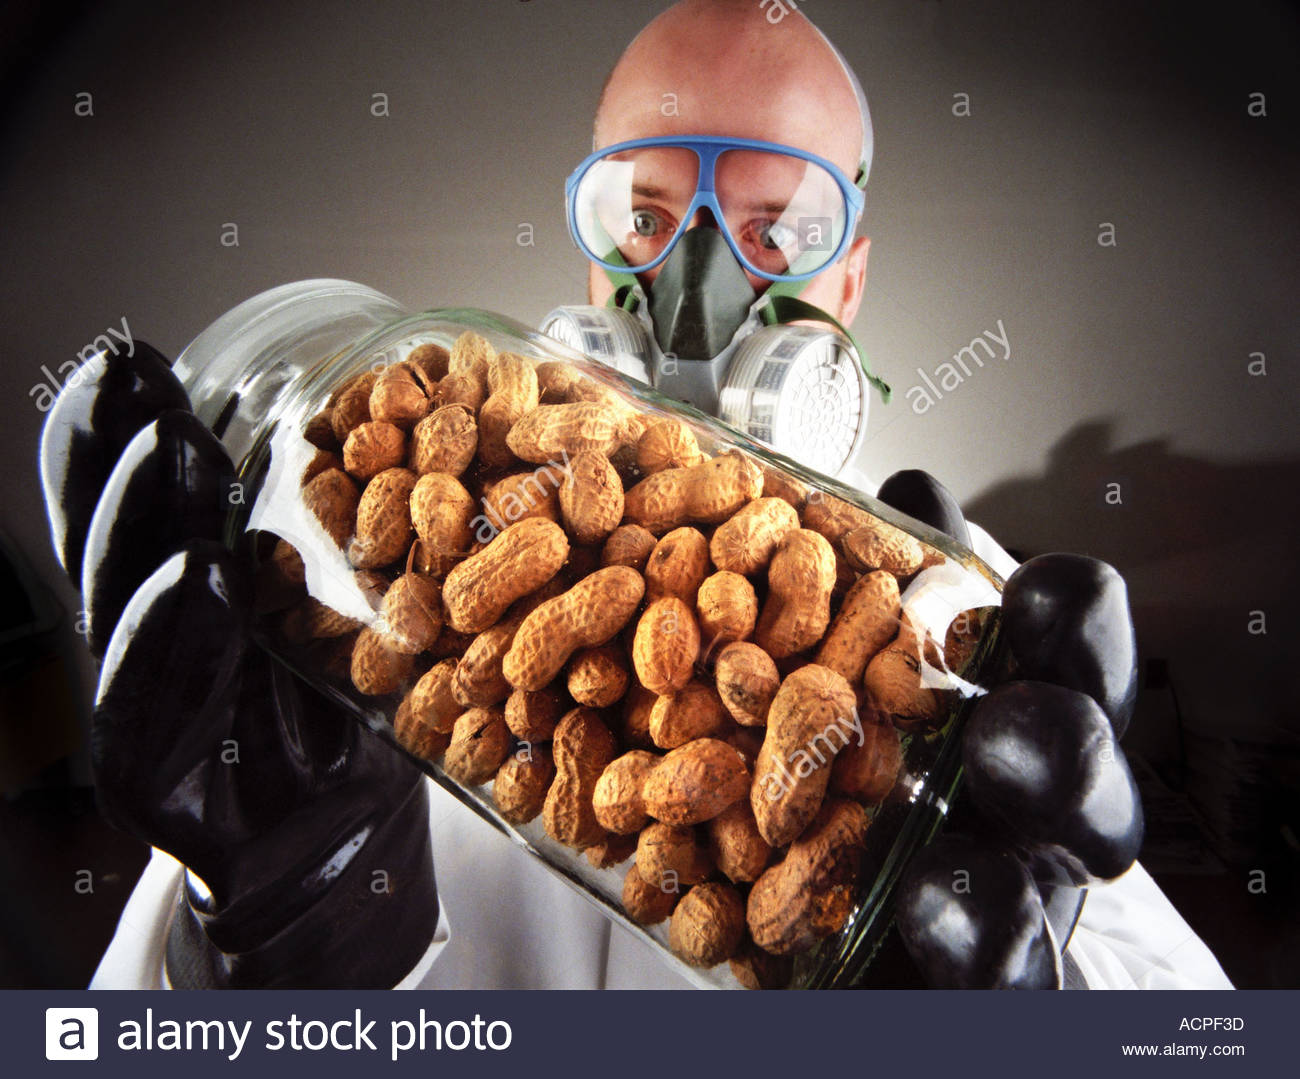 food-allergies-peanut-allergy-man-holding-jar-of-peanuts-with-protective-ACPF3D.jpg